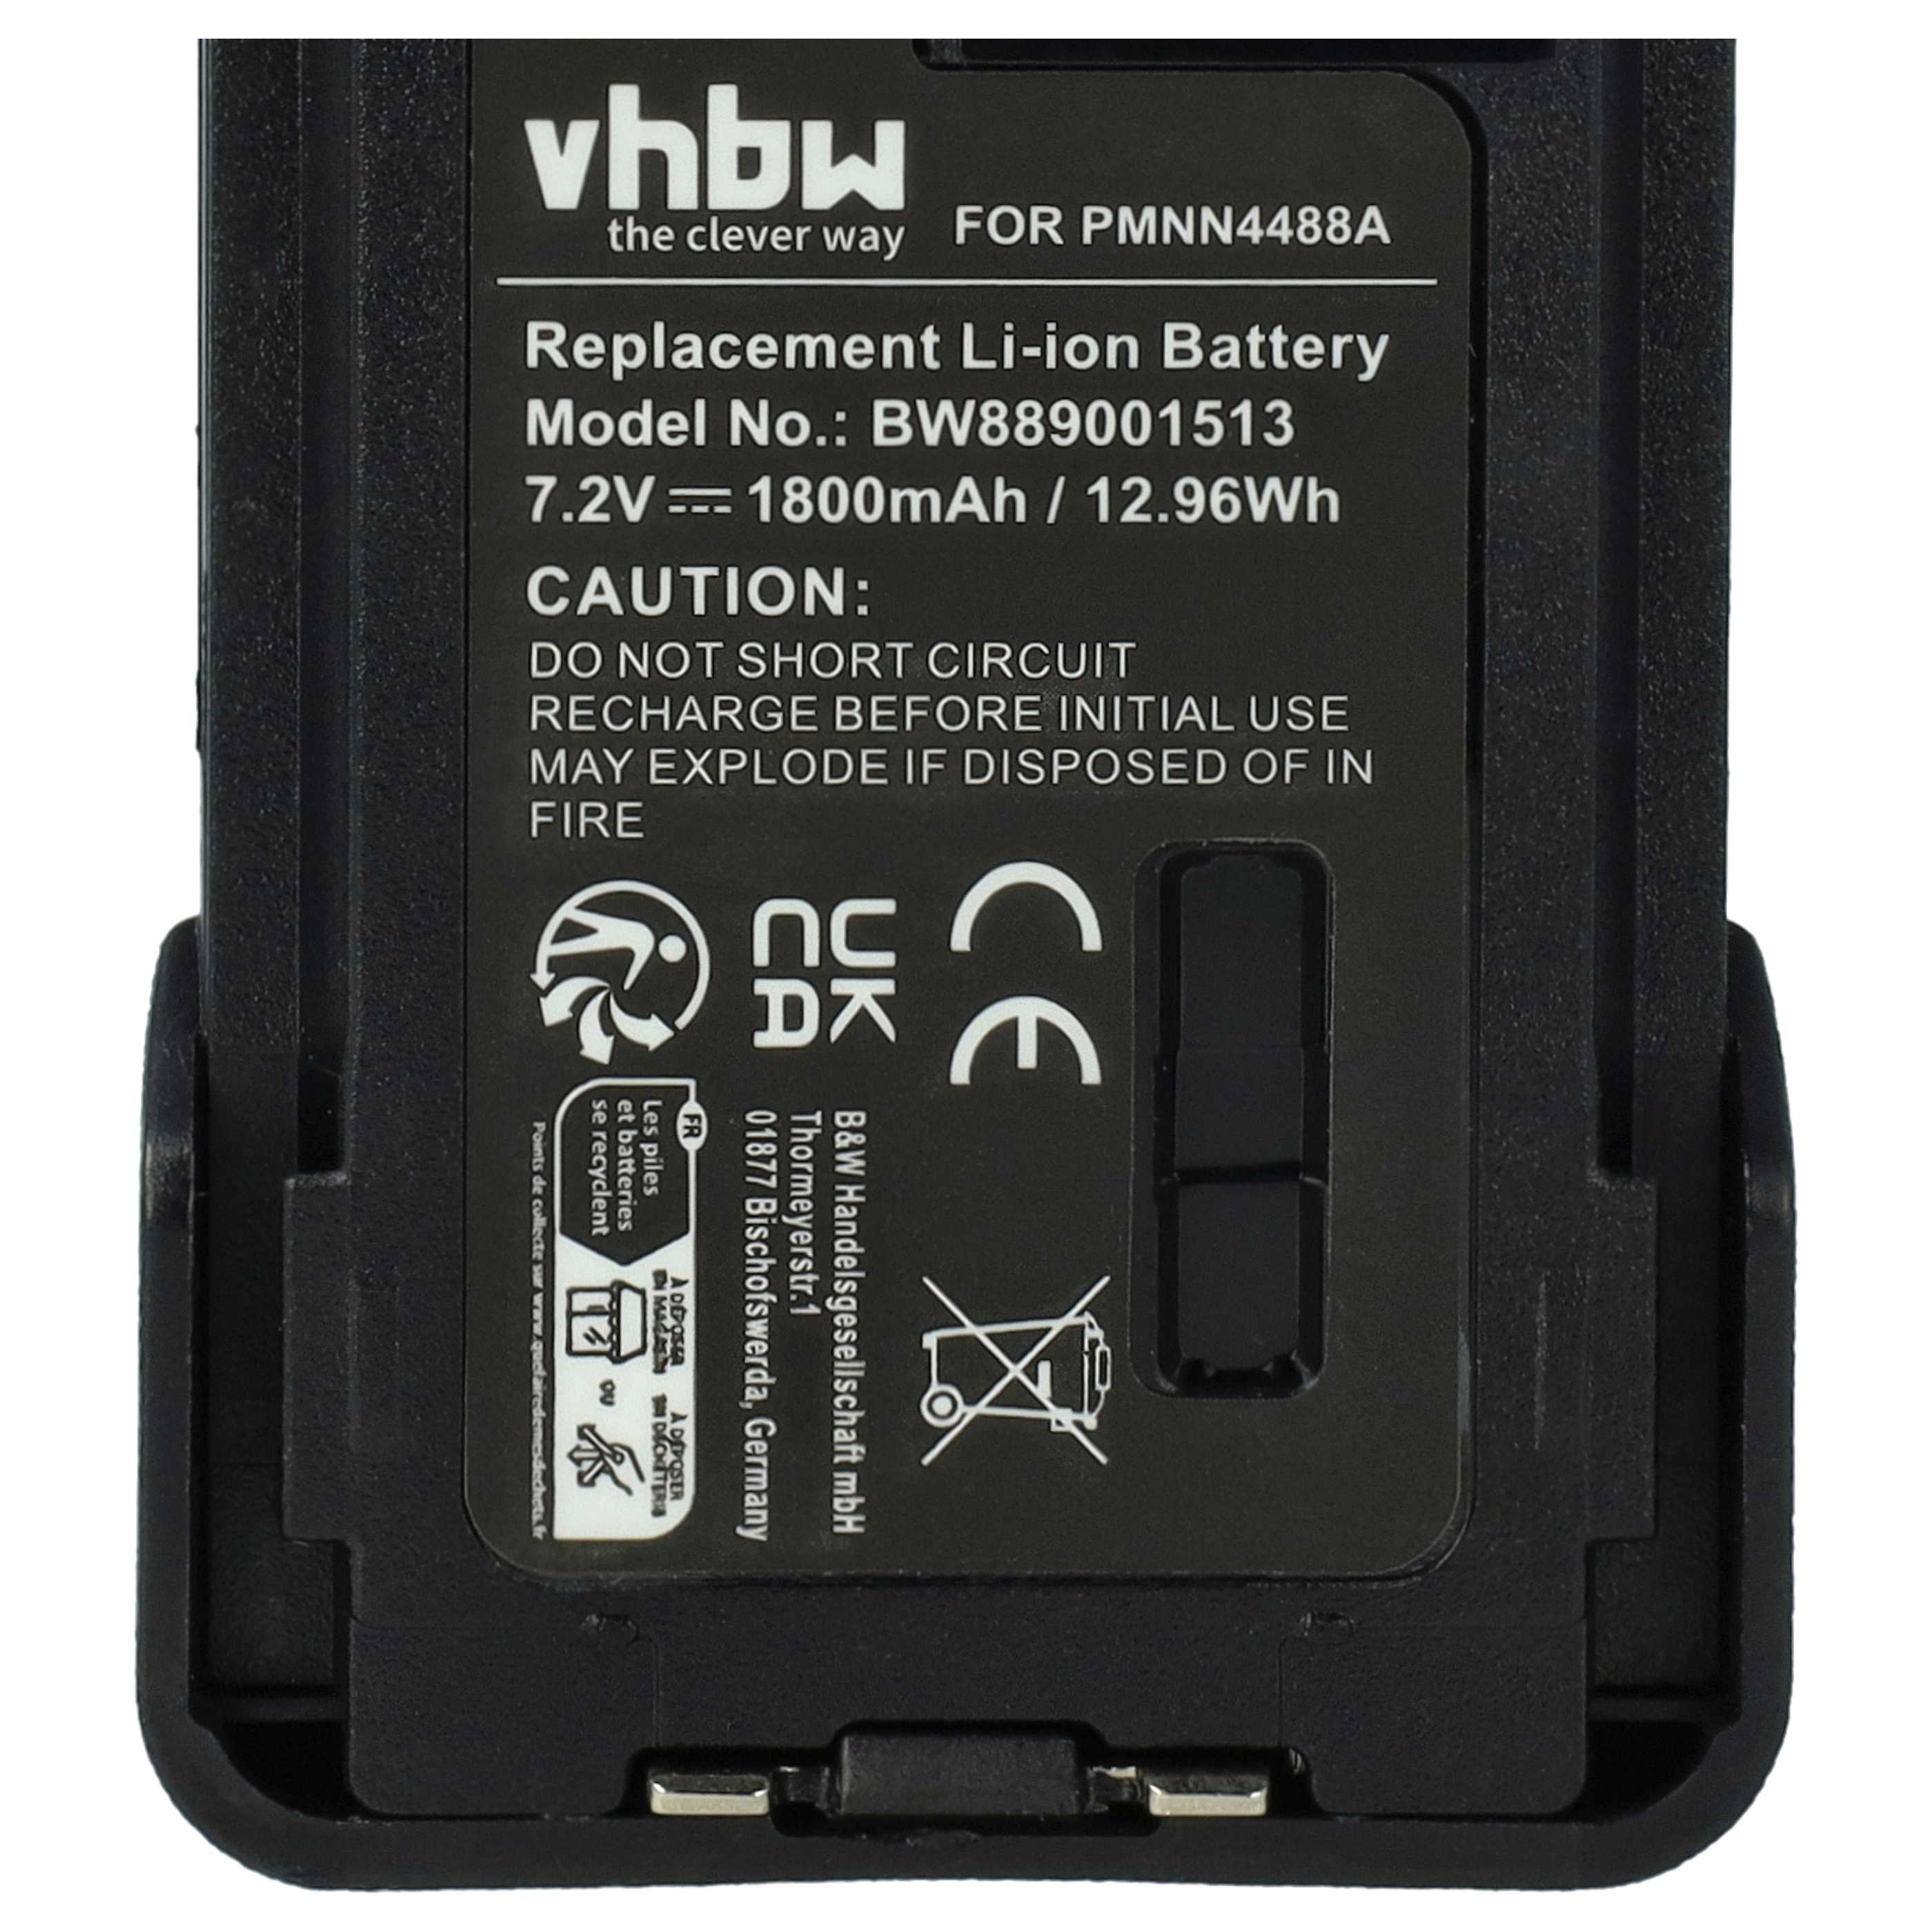 Radio Battery Replacement for Motorola PMNN4415AR, PMNN4415, PMNN441 - 1800mAh 7.4V Li-Ion + Belt Clip